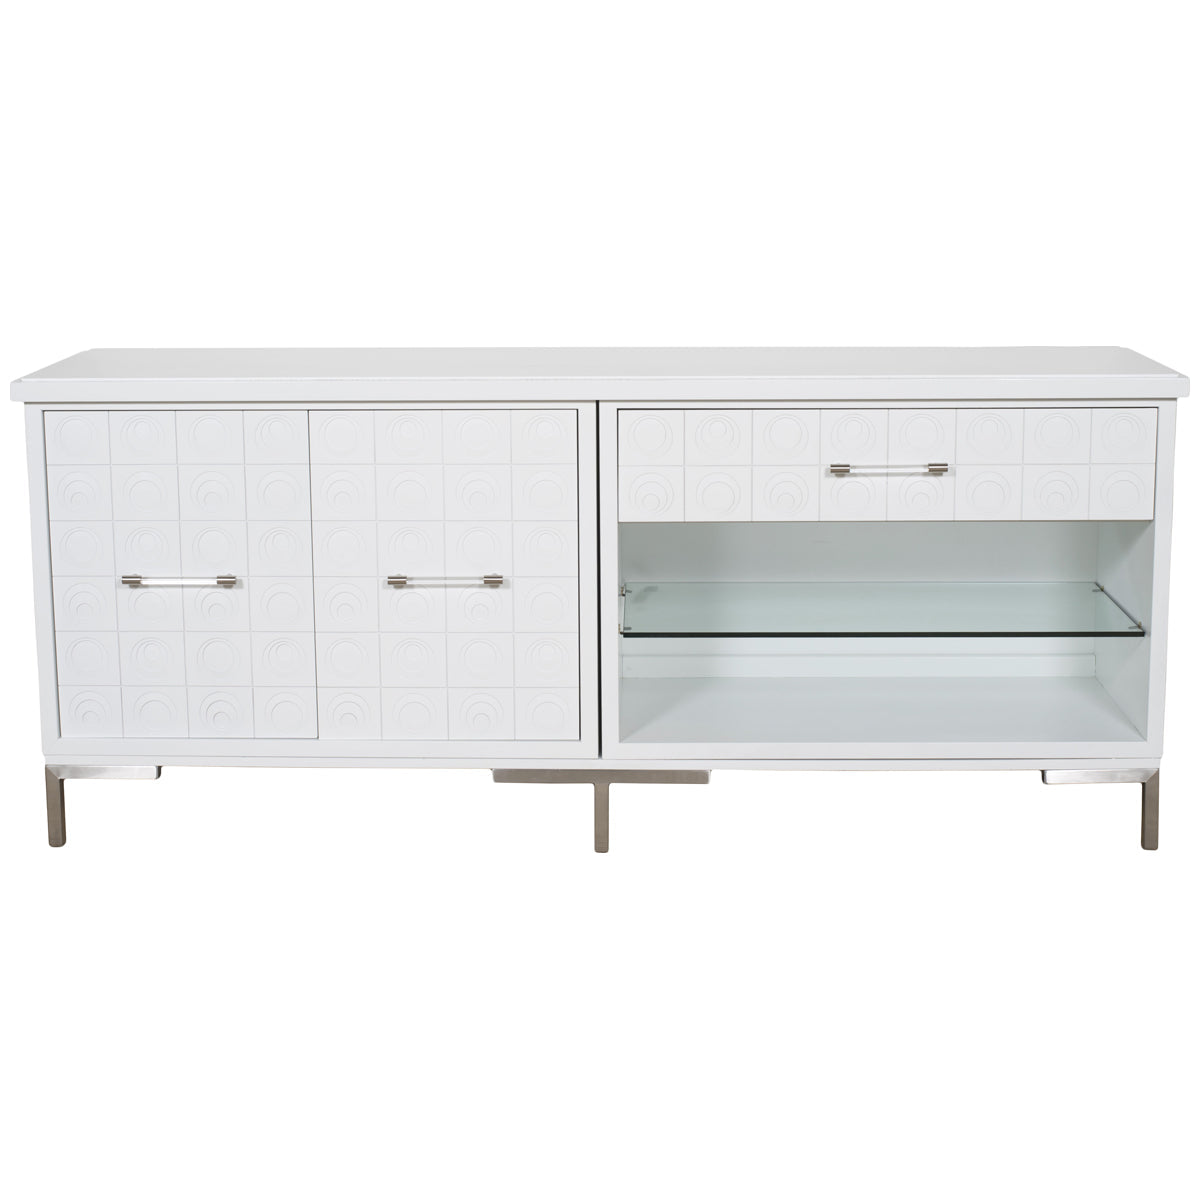 Vanguard Furniture Solene Lifestyle 2-Door and 1-Drawer Cabinet